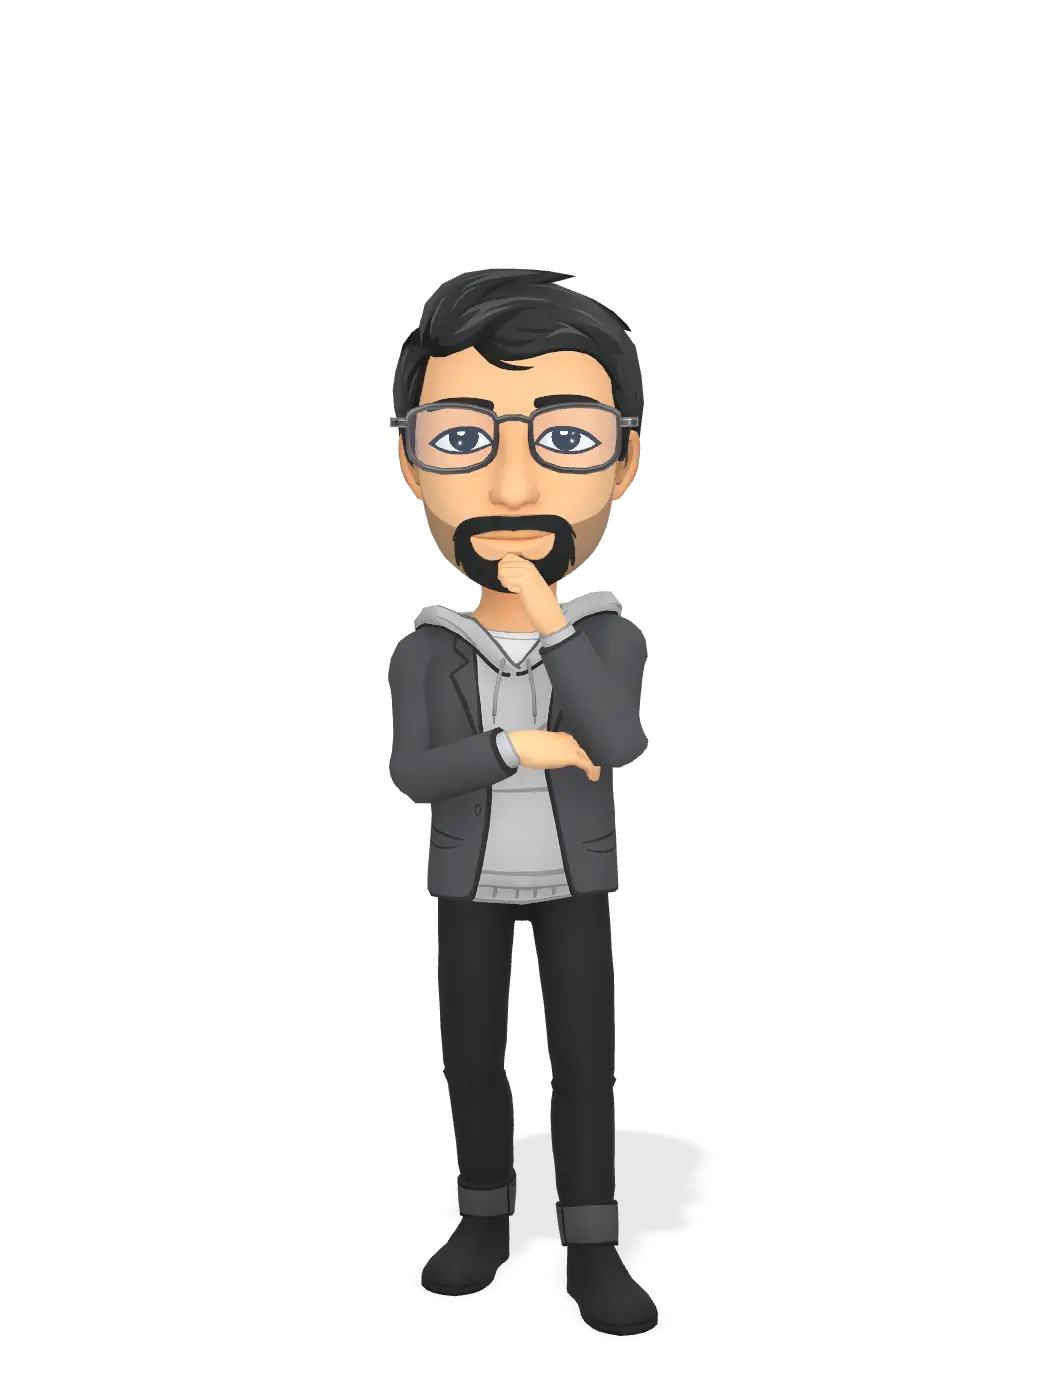 3D Bitmoji for abdulrhman-basm avatar